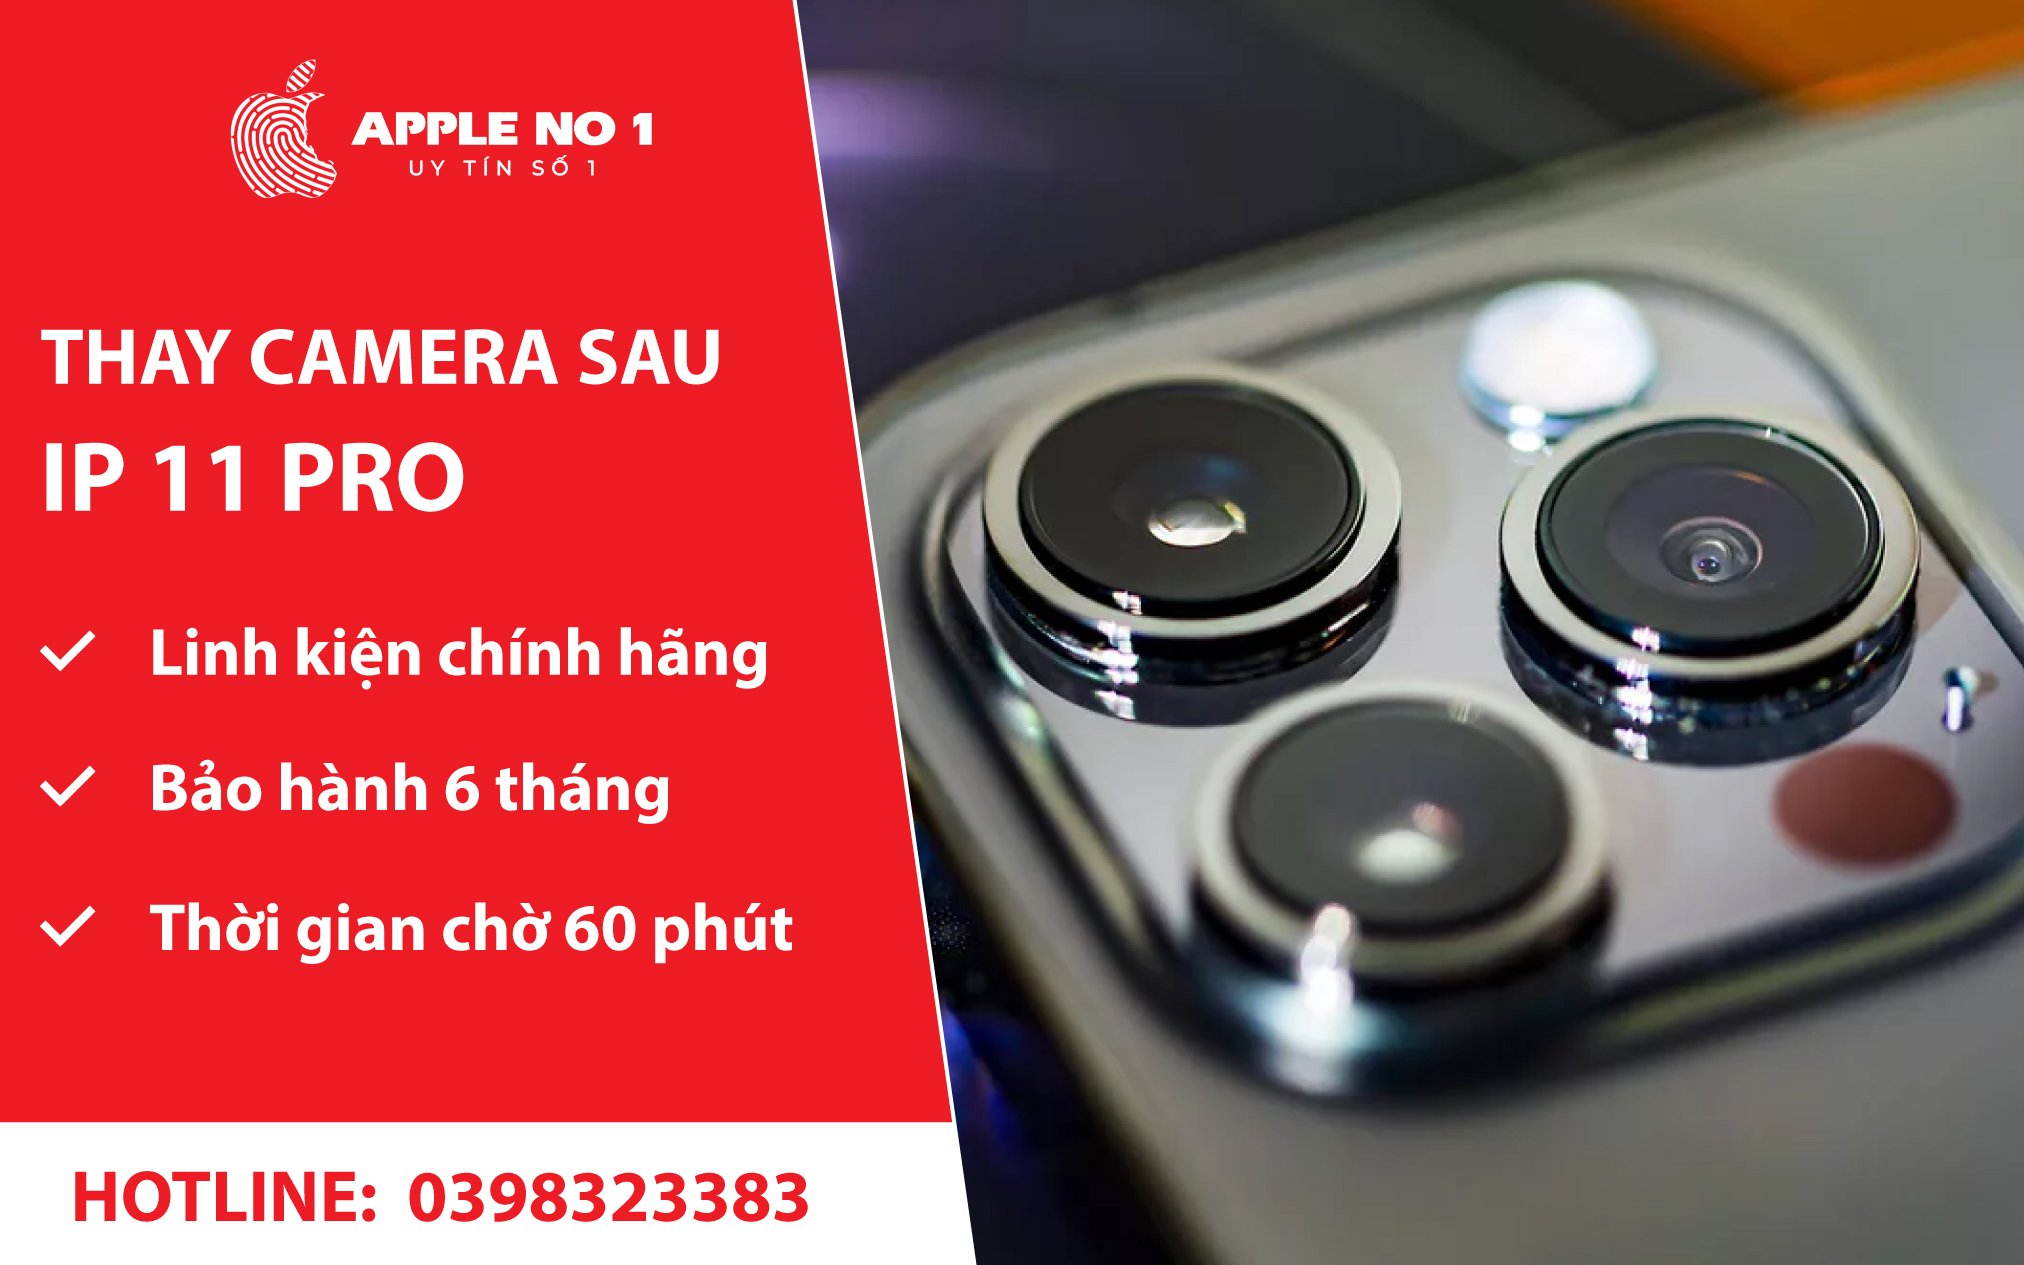 thay camera sau iphone 11 pro chat luong, chuyen nghiep tai apple no.1